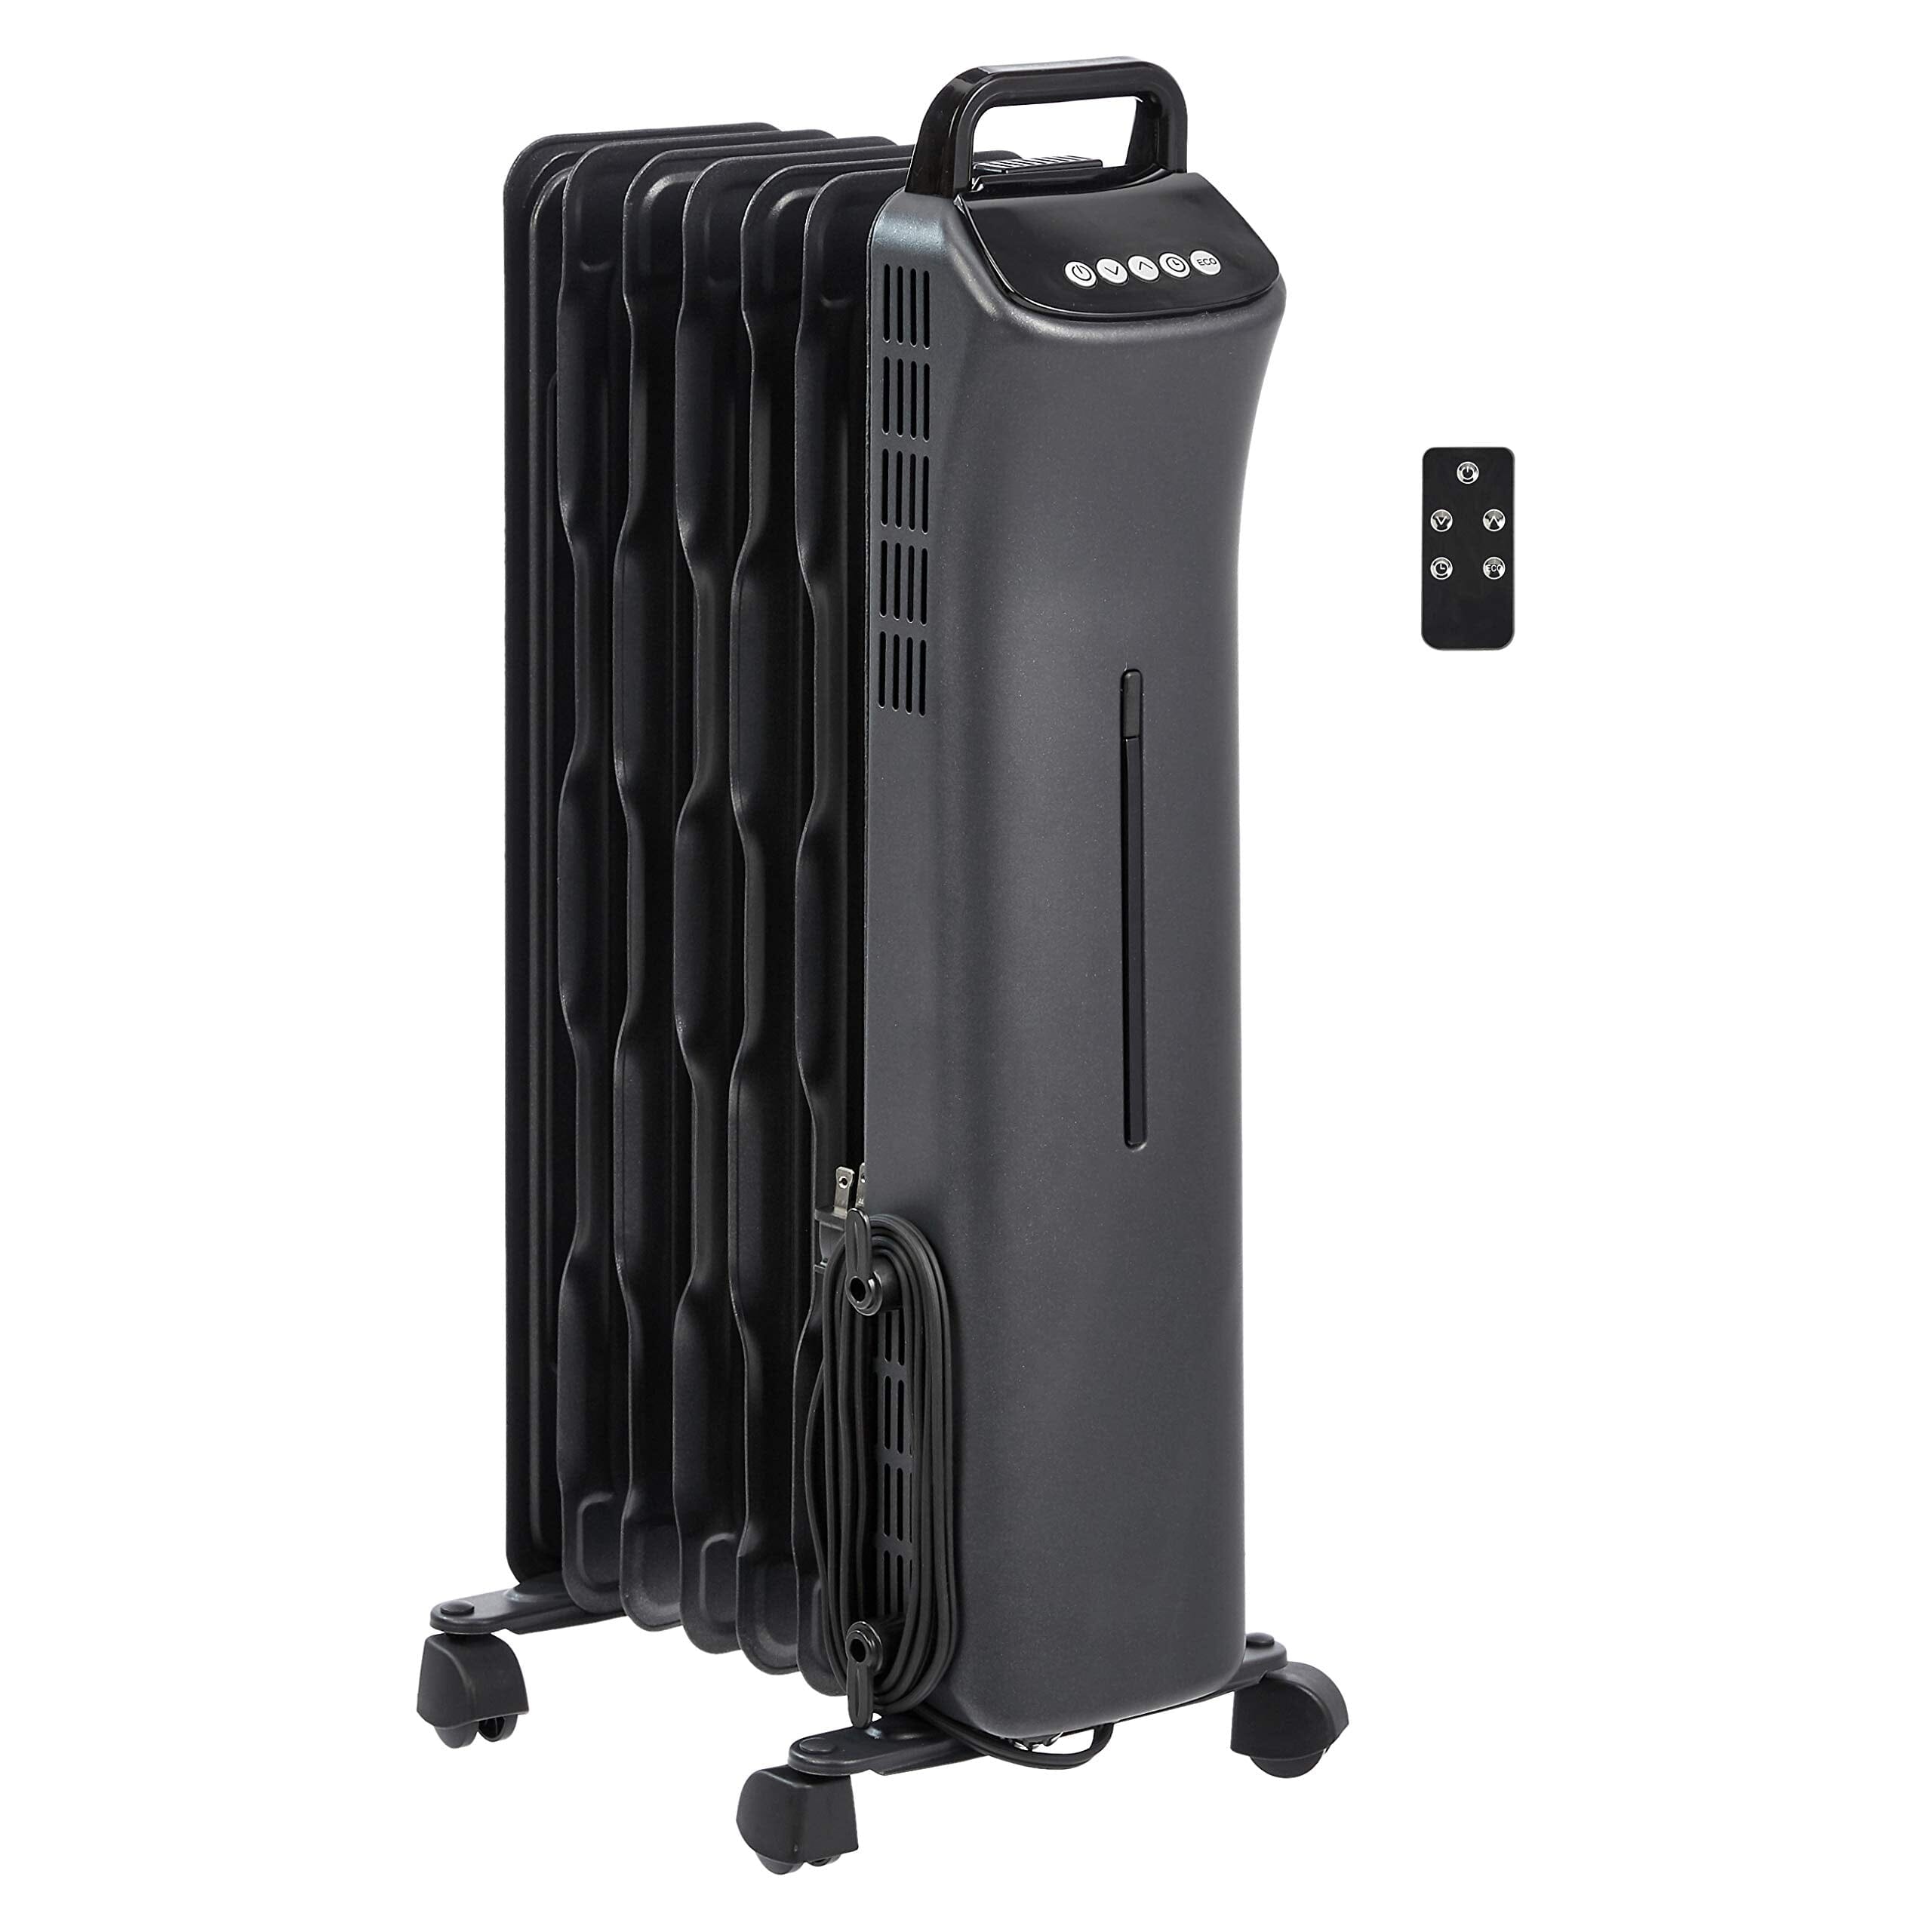 Amazon Basics Portable Digital Radiator Heater Oil Radiator Heater Amazon Basics 